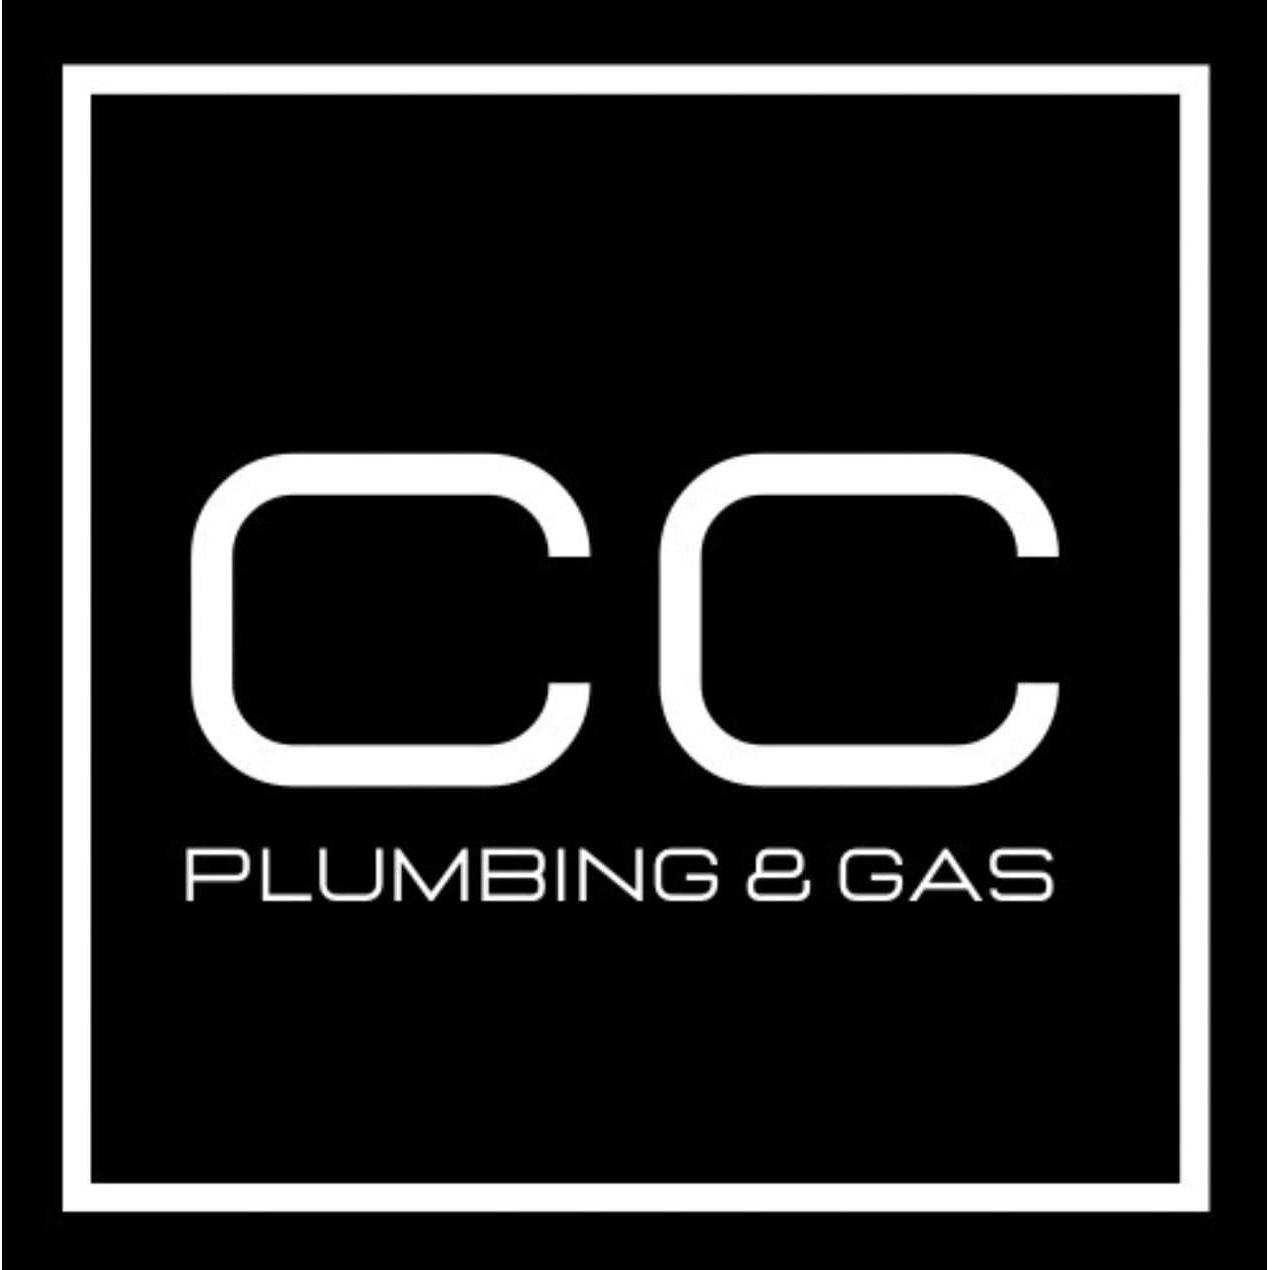 CC Plumbing and Gas - Cardiff, South Glamorgan CF5 6GB - 07940 929483 | ShowMeLocal.com